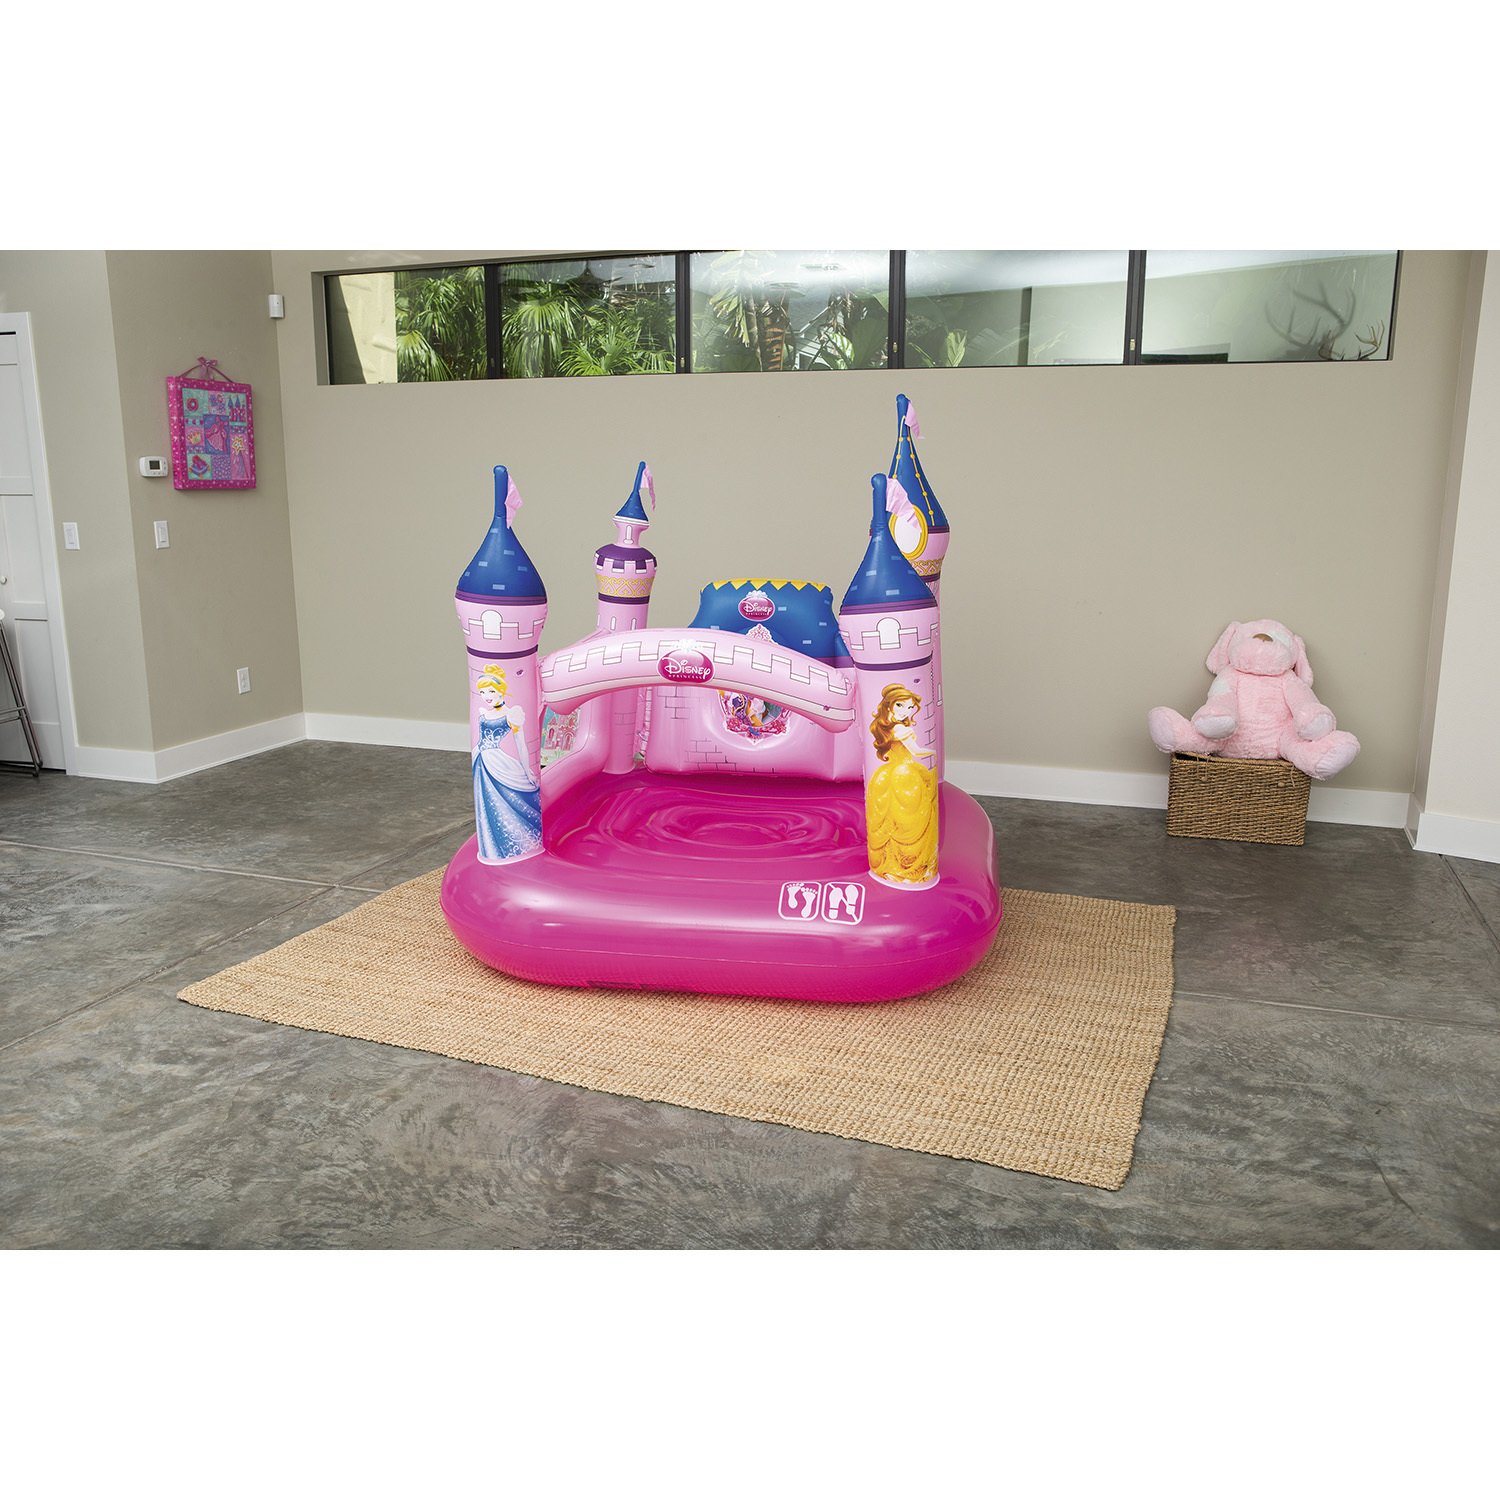 Надувной батут Замок из серии Disney Princess, размер 157 х 147 х 163 см., до 85 кг.  